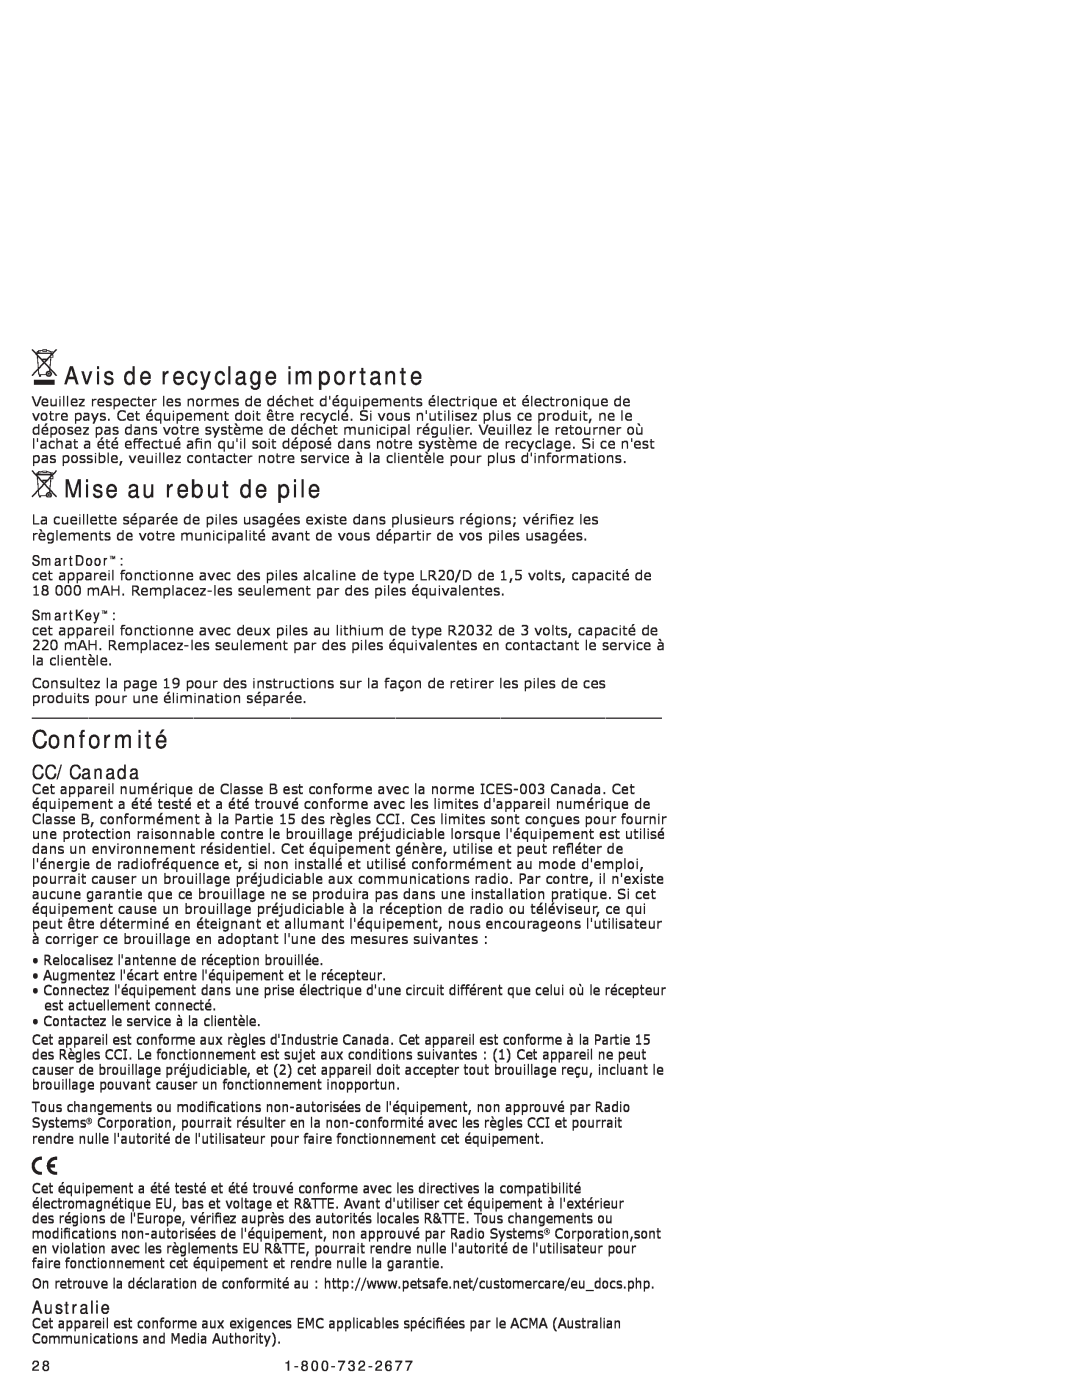 Petsafe PPA11-10711 manual Avis de recyclage importante, Mise au rebut de pile, Conformité, CC/Canada, Australie, SmartDoor 